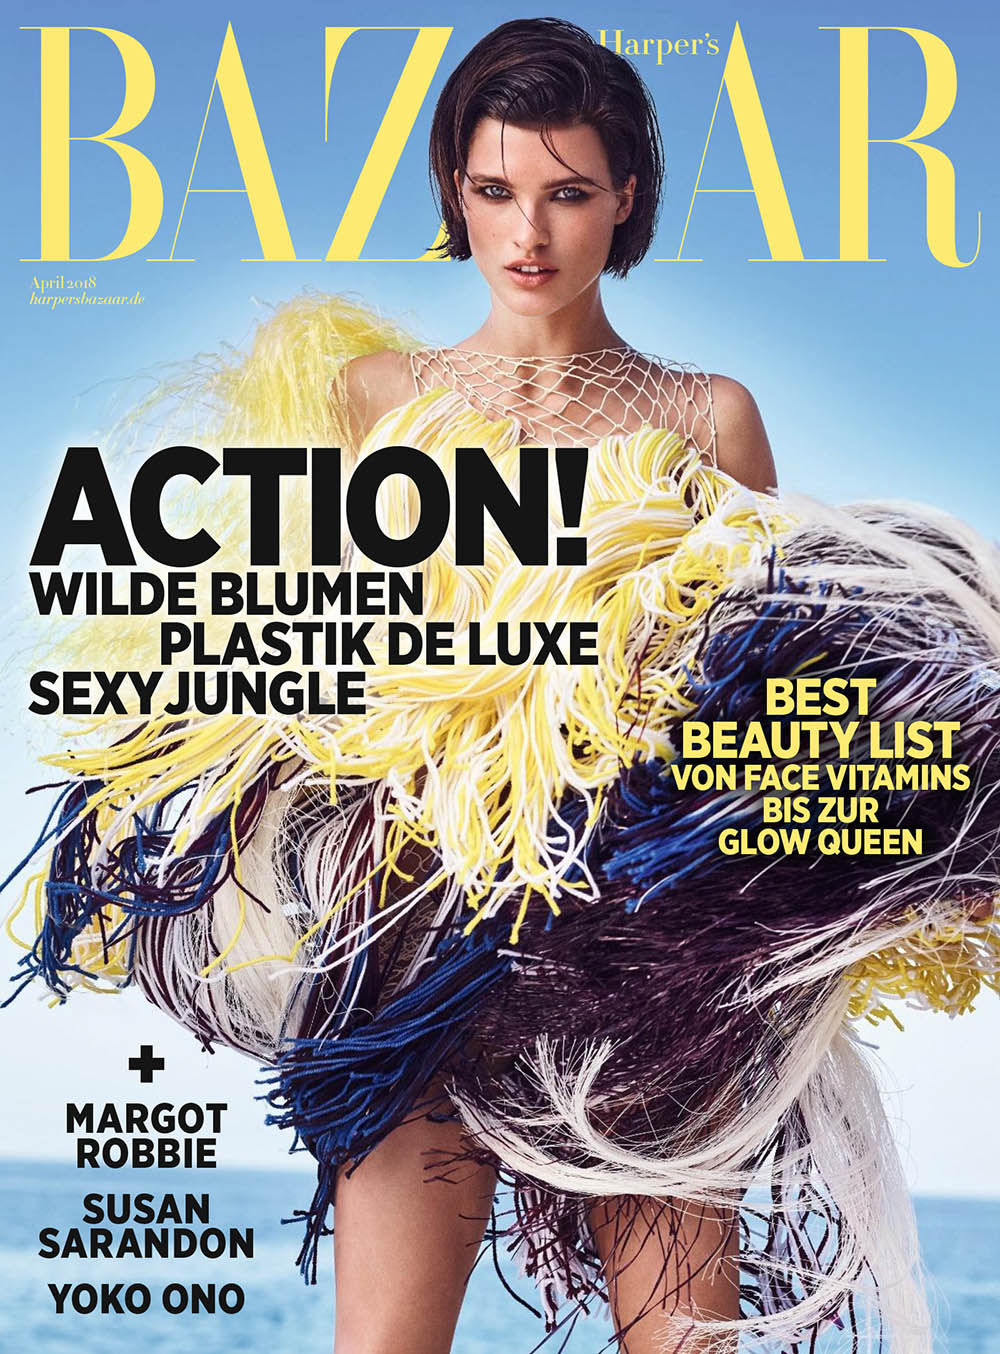 Julia van Os covers Harper’s Bazaar Germany April 2018 by Marcin Tyszka